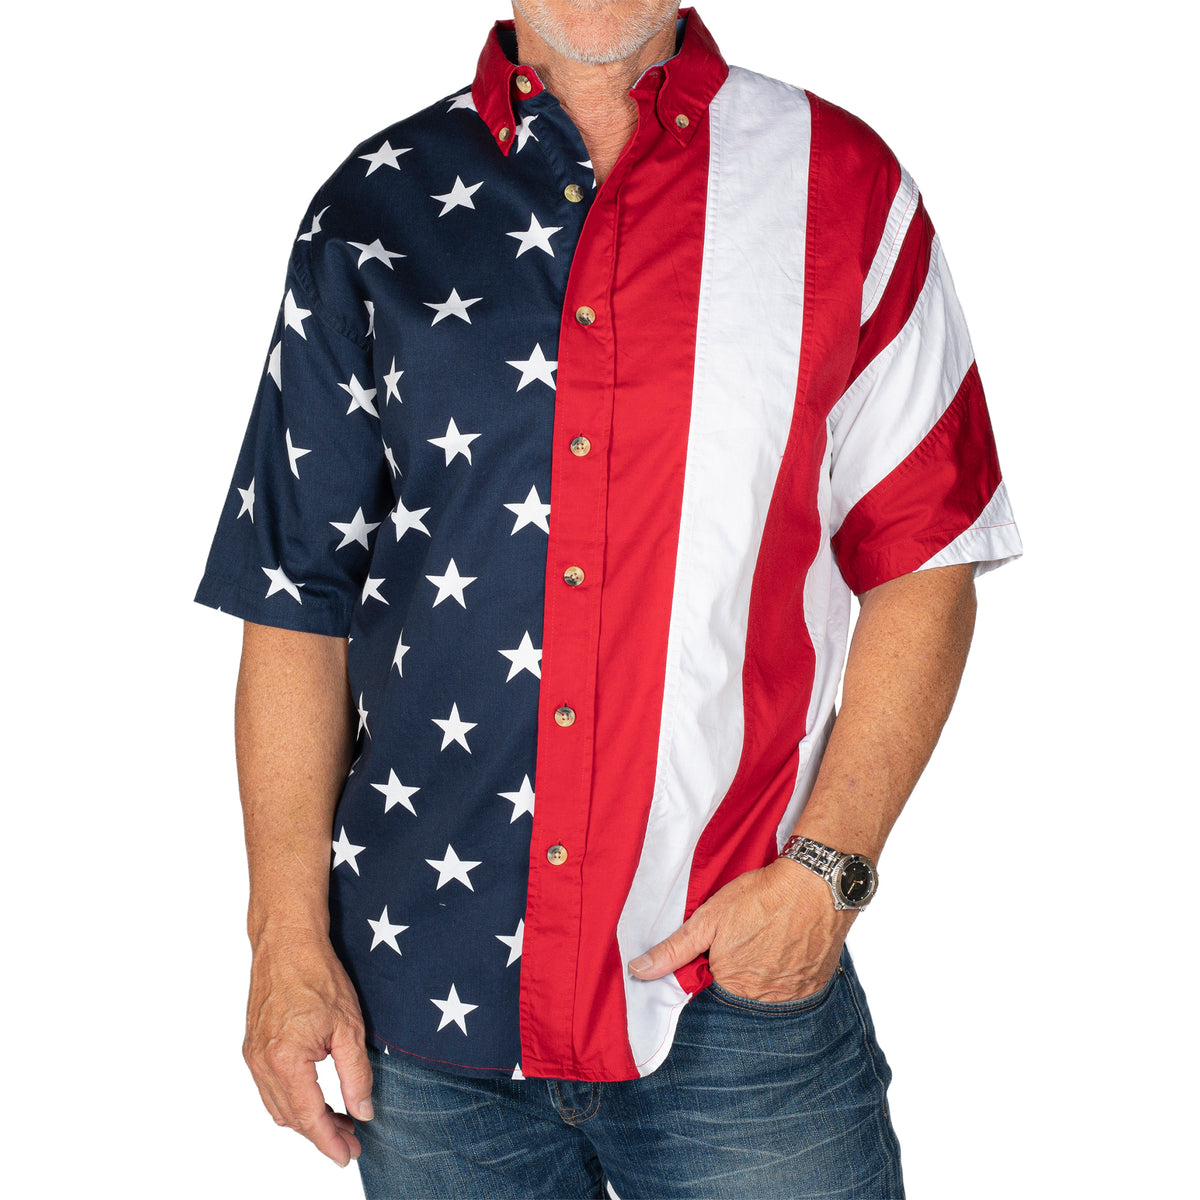 Men's Stars & Stripes 100% Cotton Button-Up Shirt – The Flag Shirt